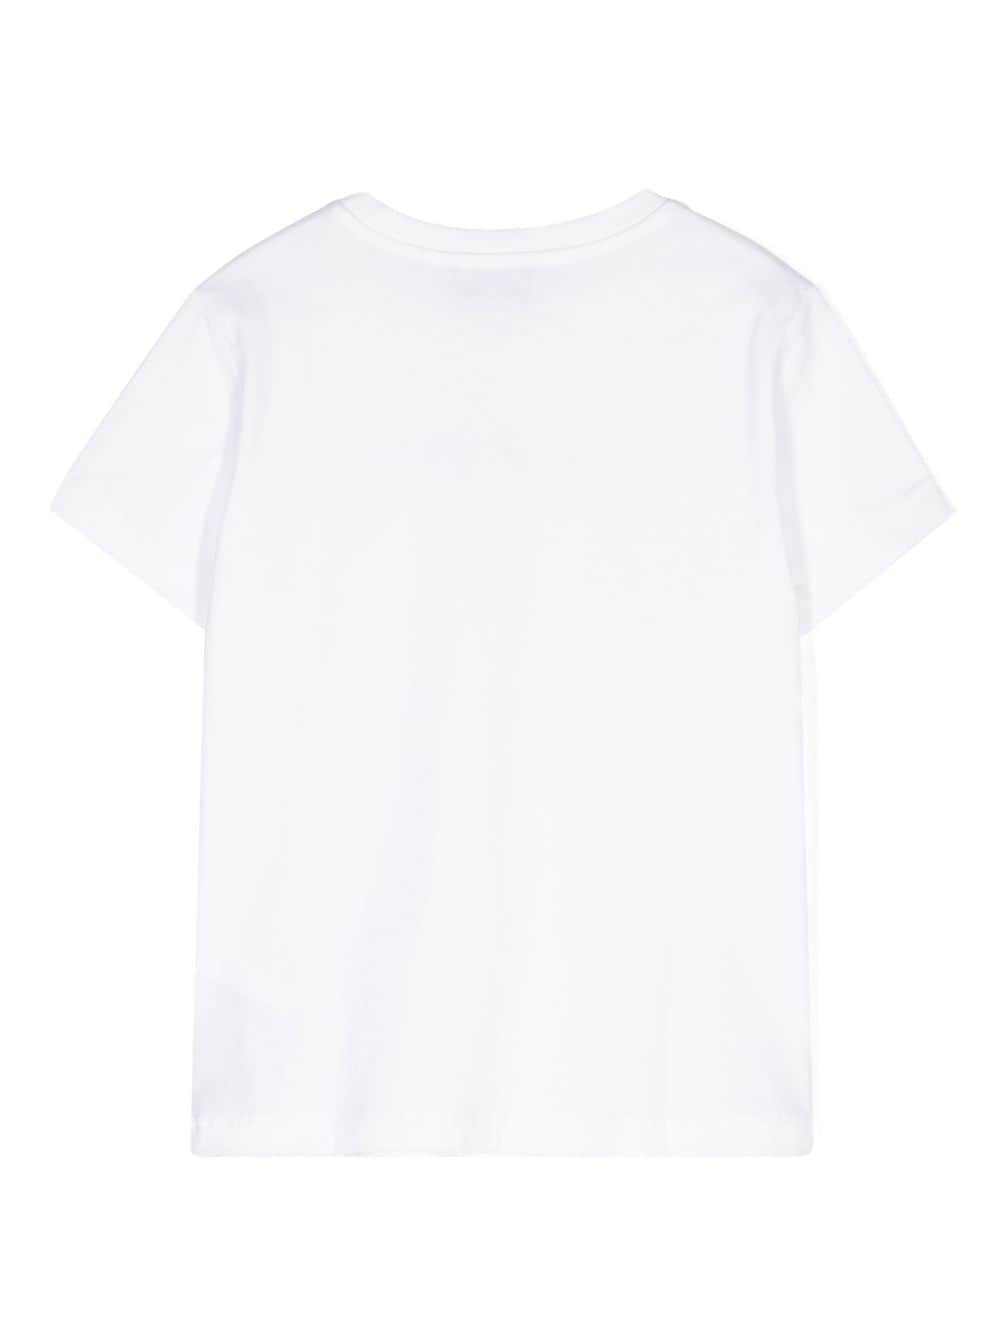 White cotton unisex t-shirt